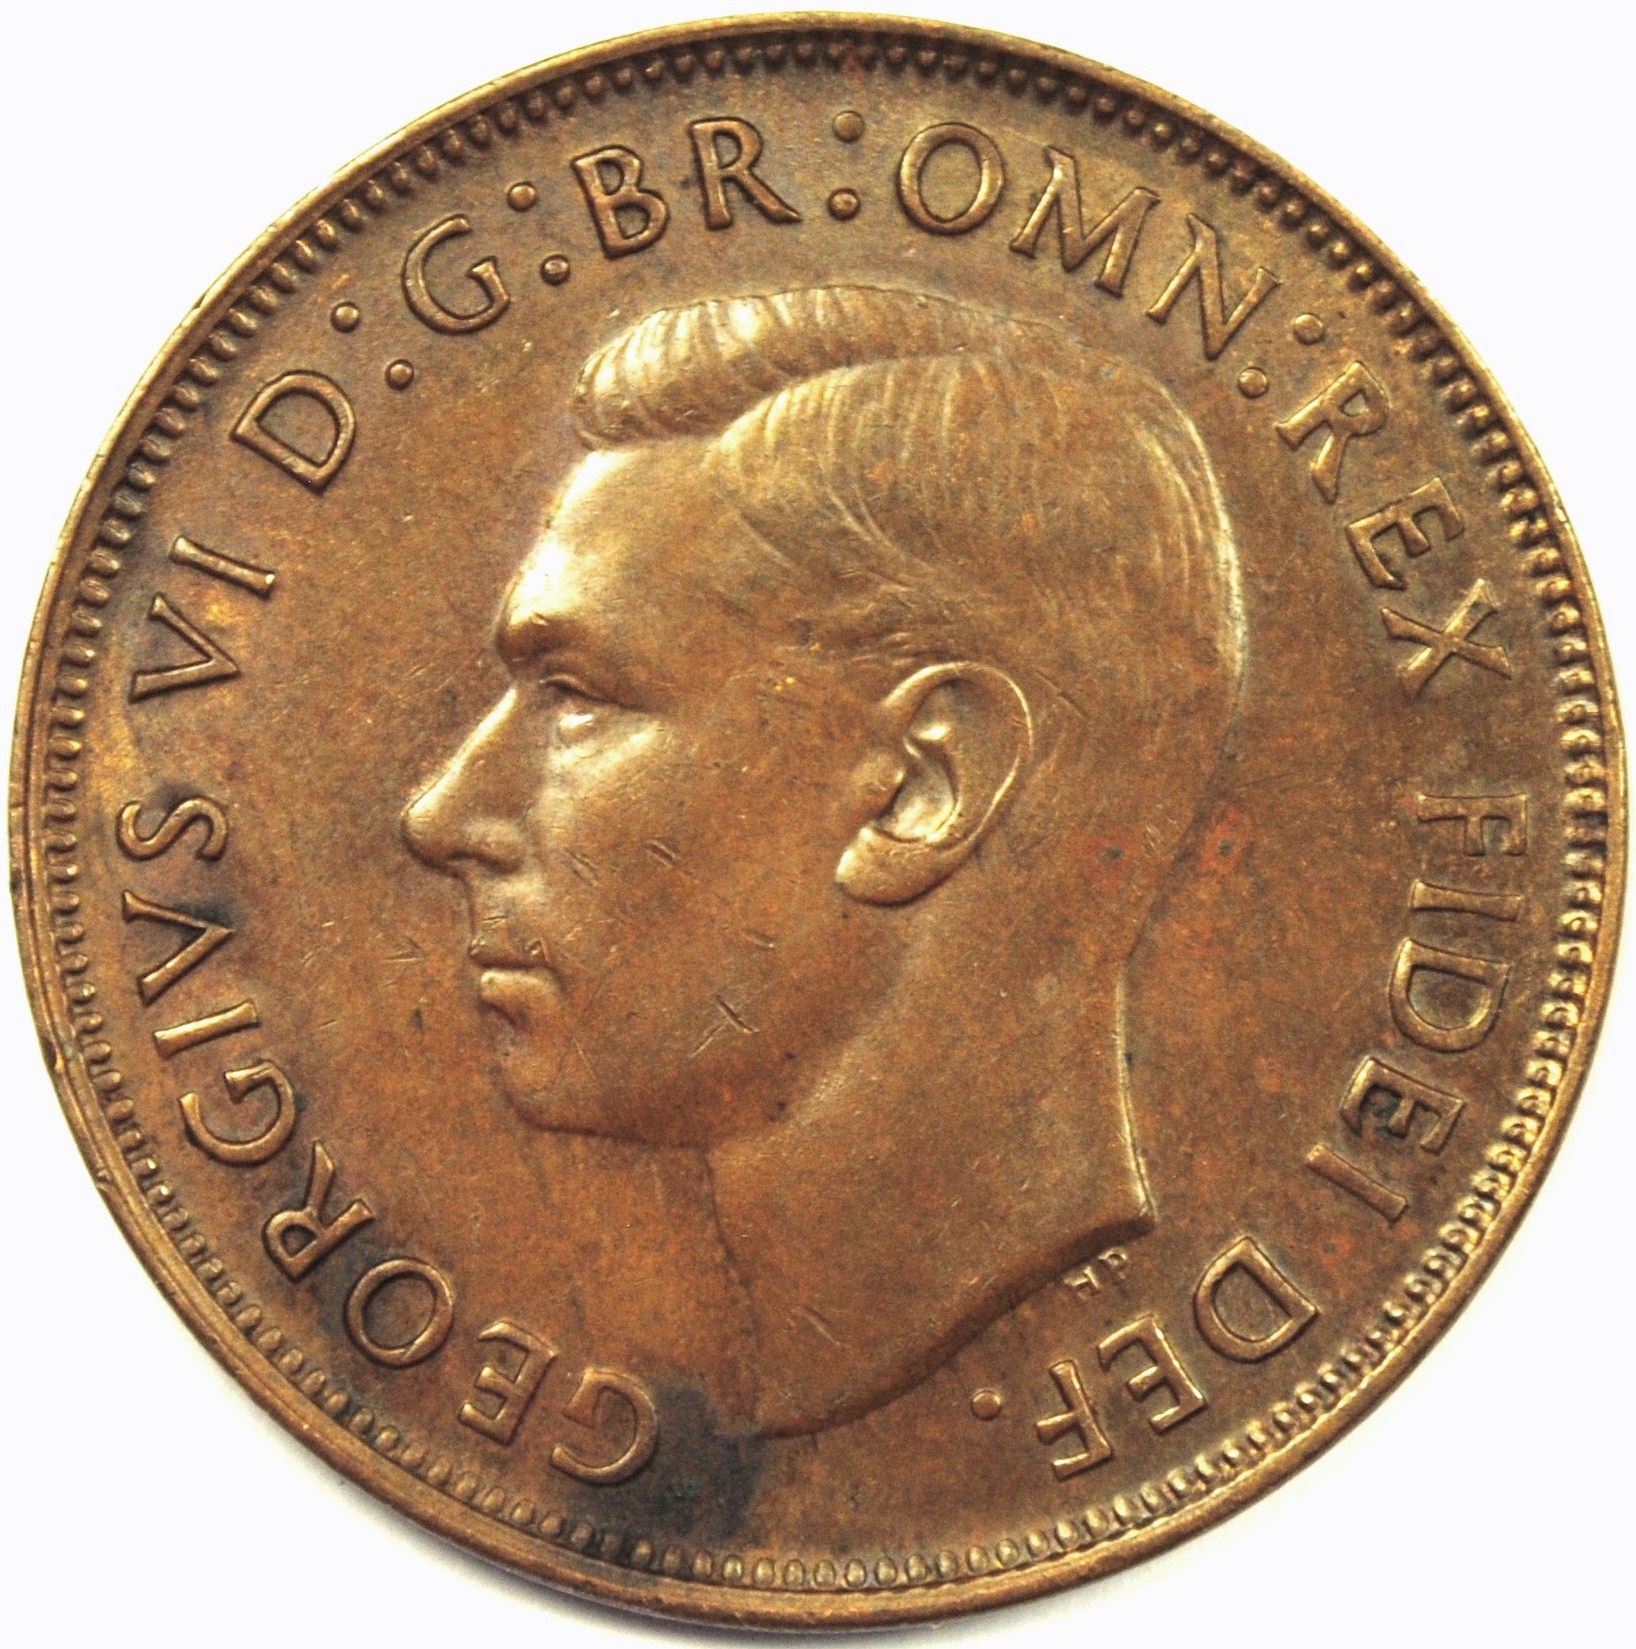 1939 australian penny coin value